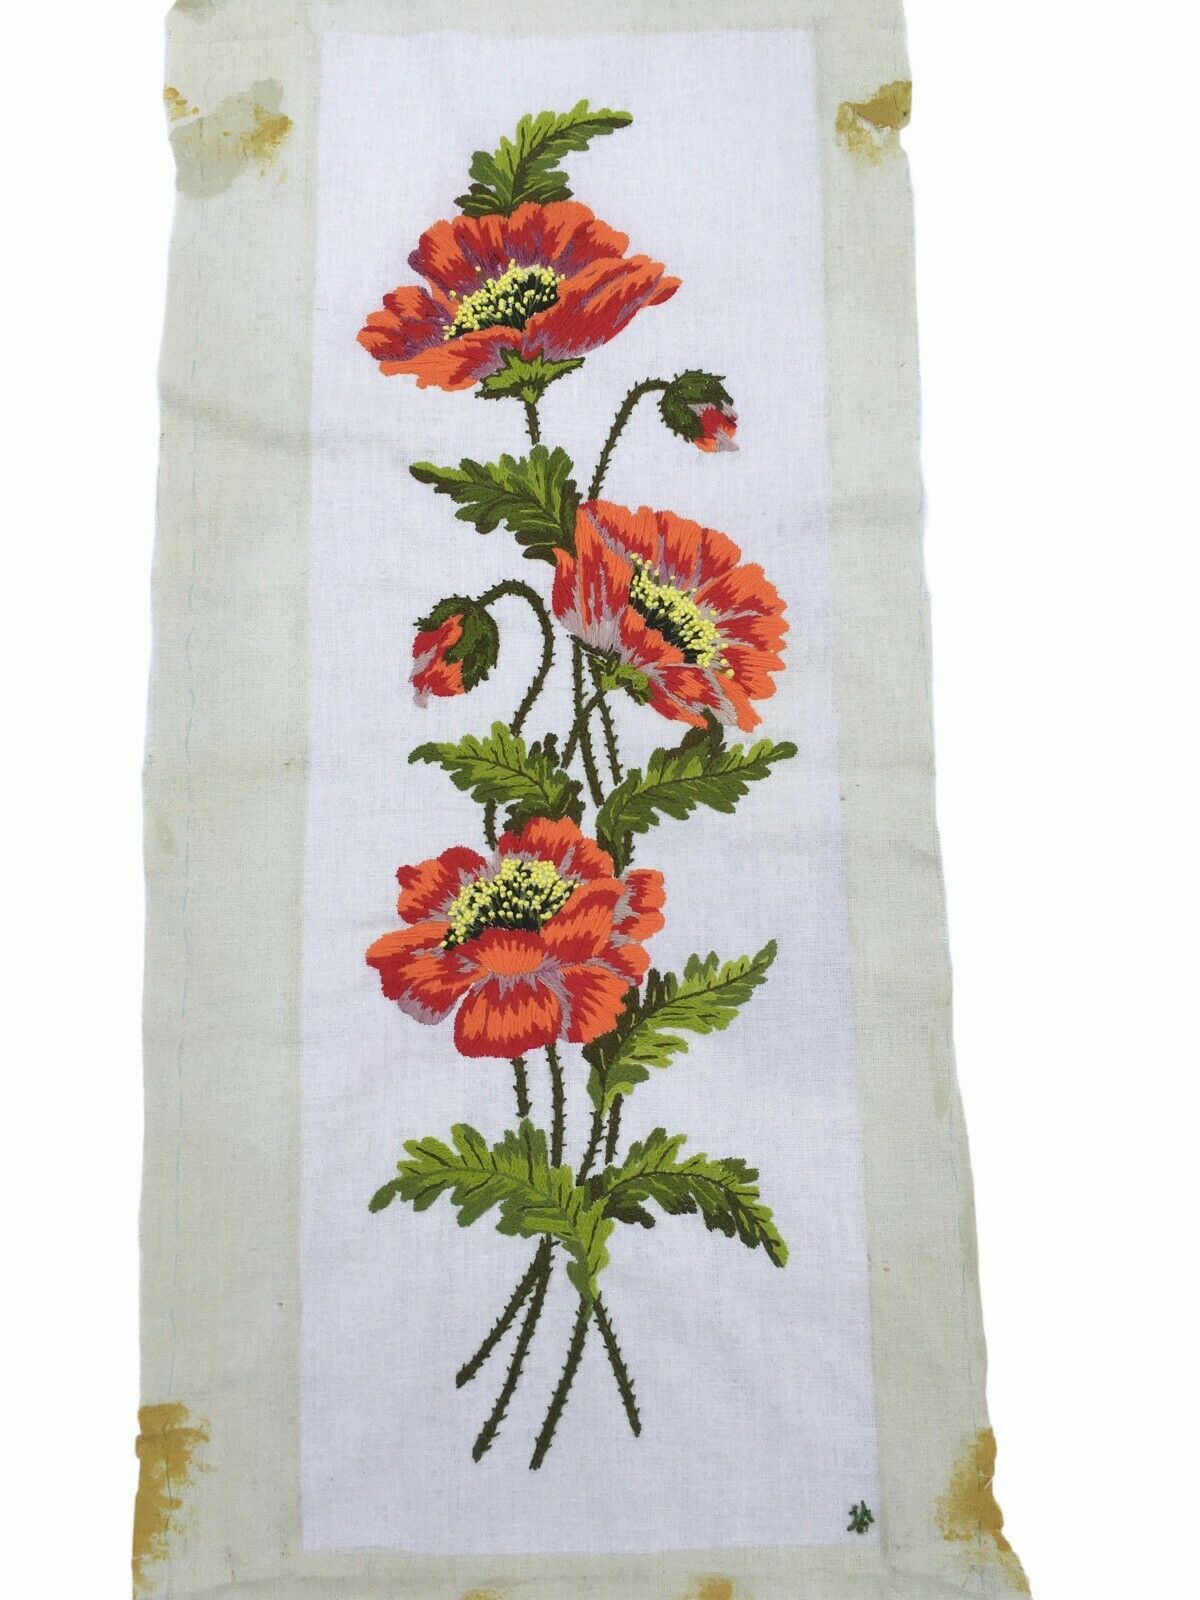 Vintage Embroidery Needlepoint Art Poppy Flower Homemade Crewel Large Unframed